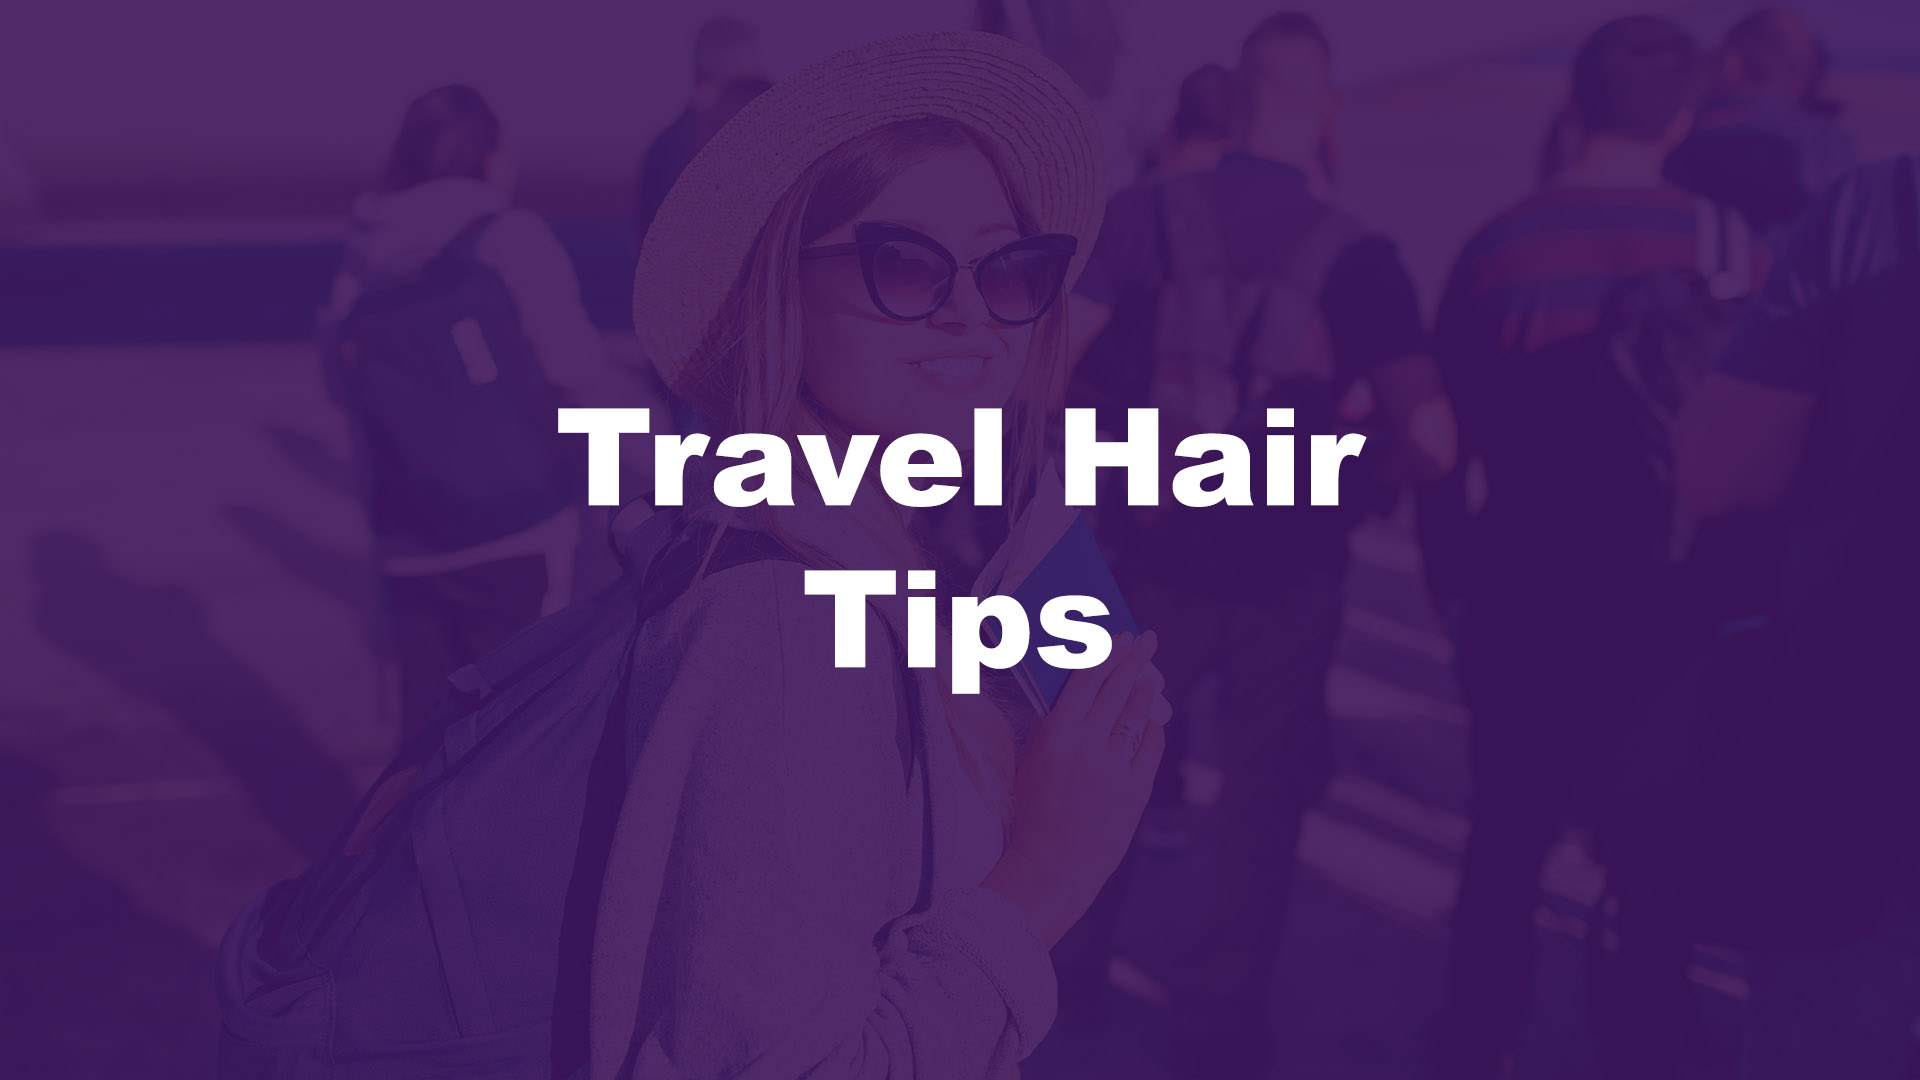 Travel hair tips